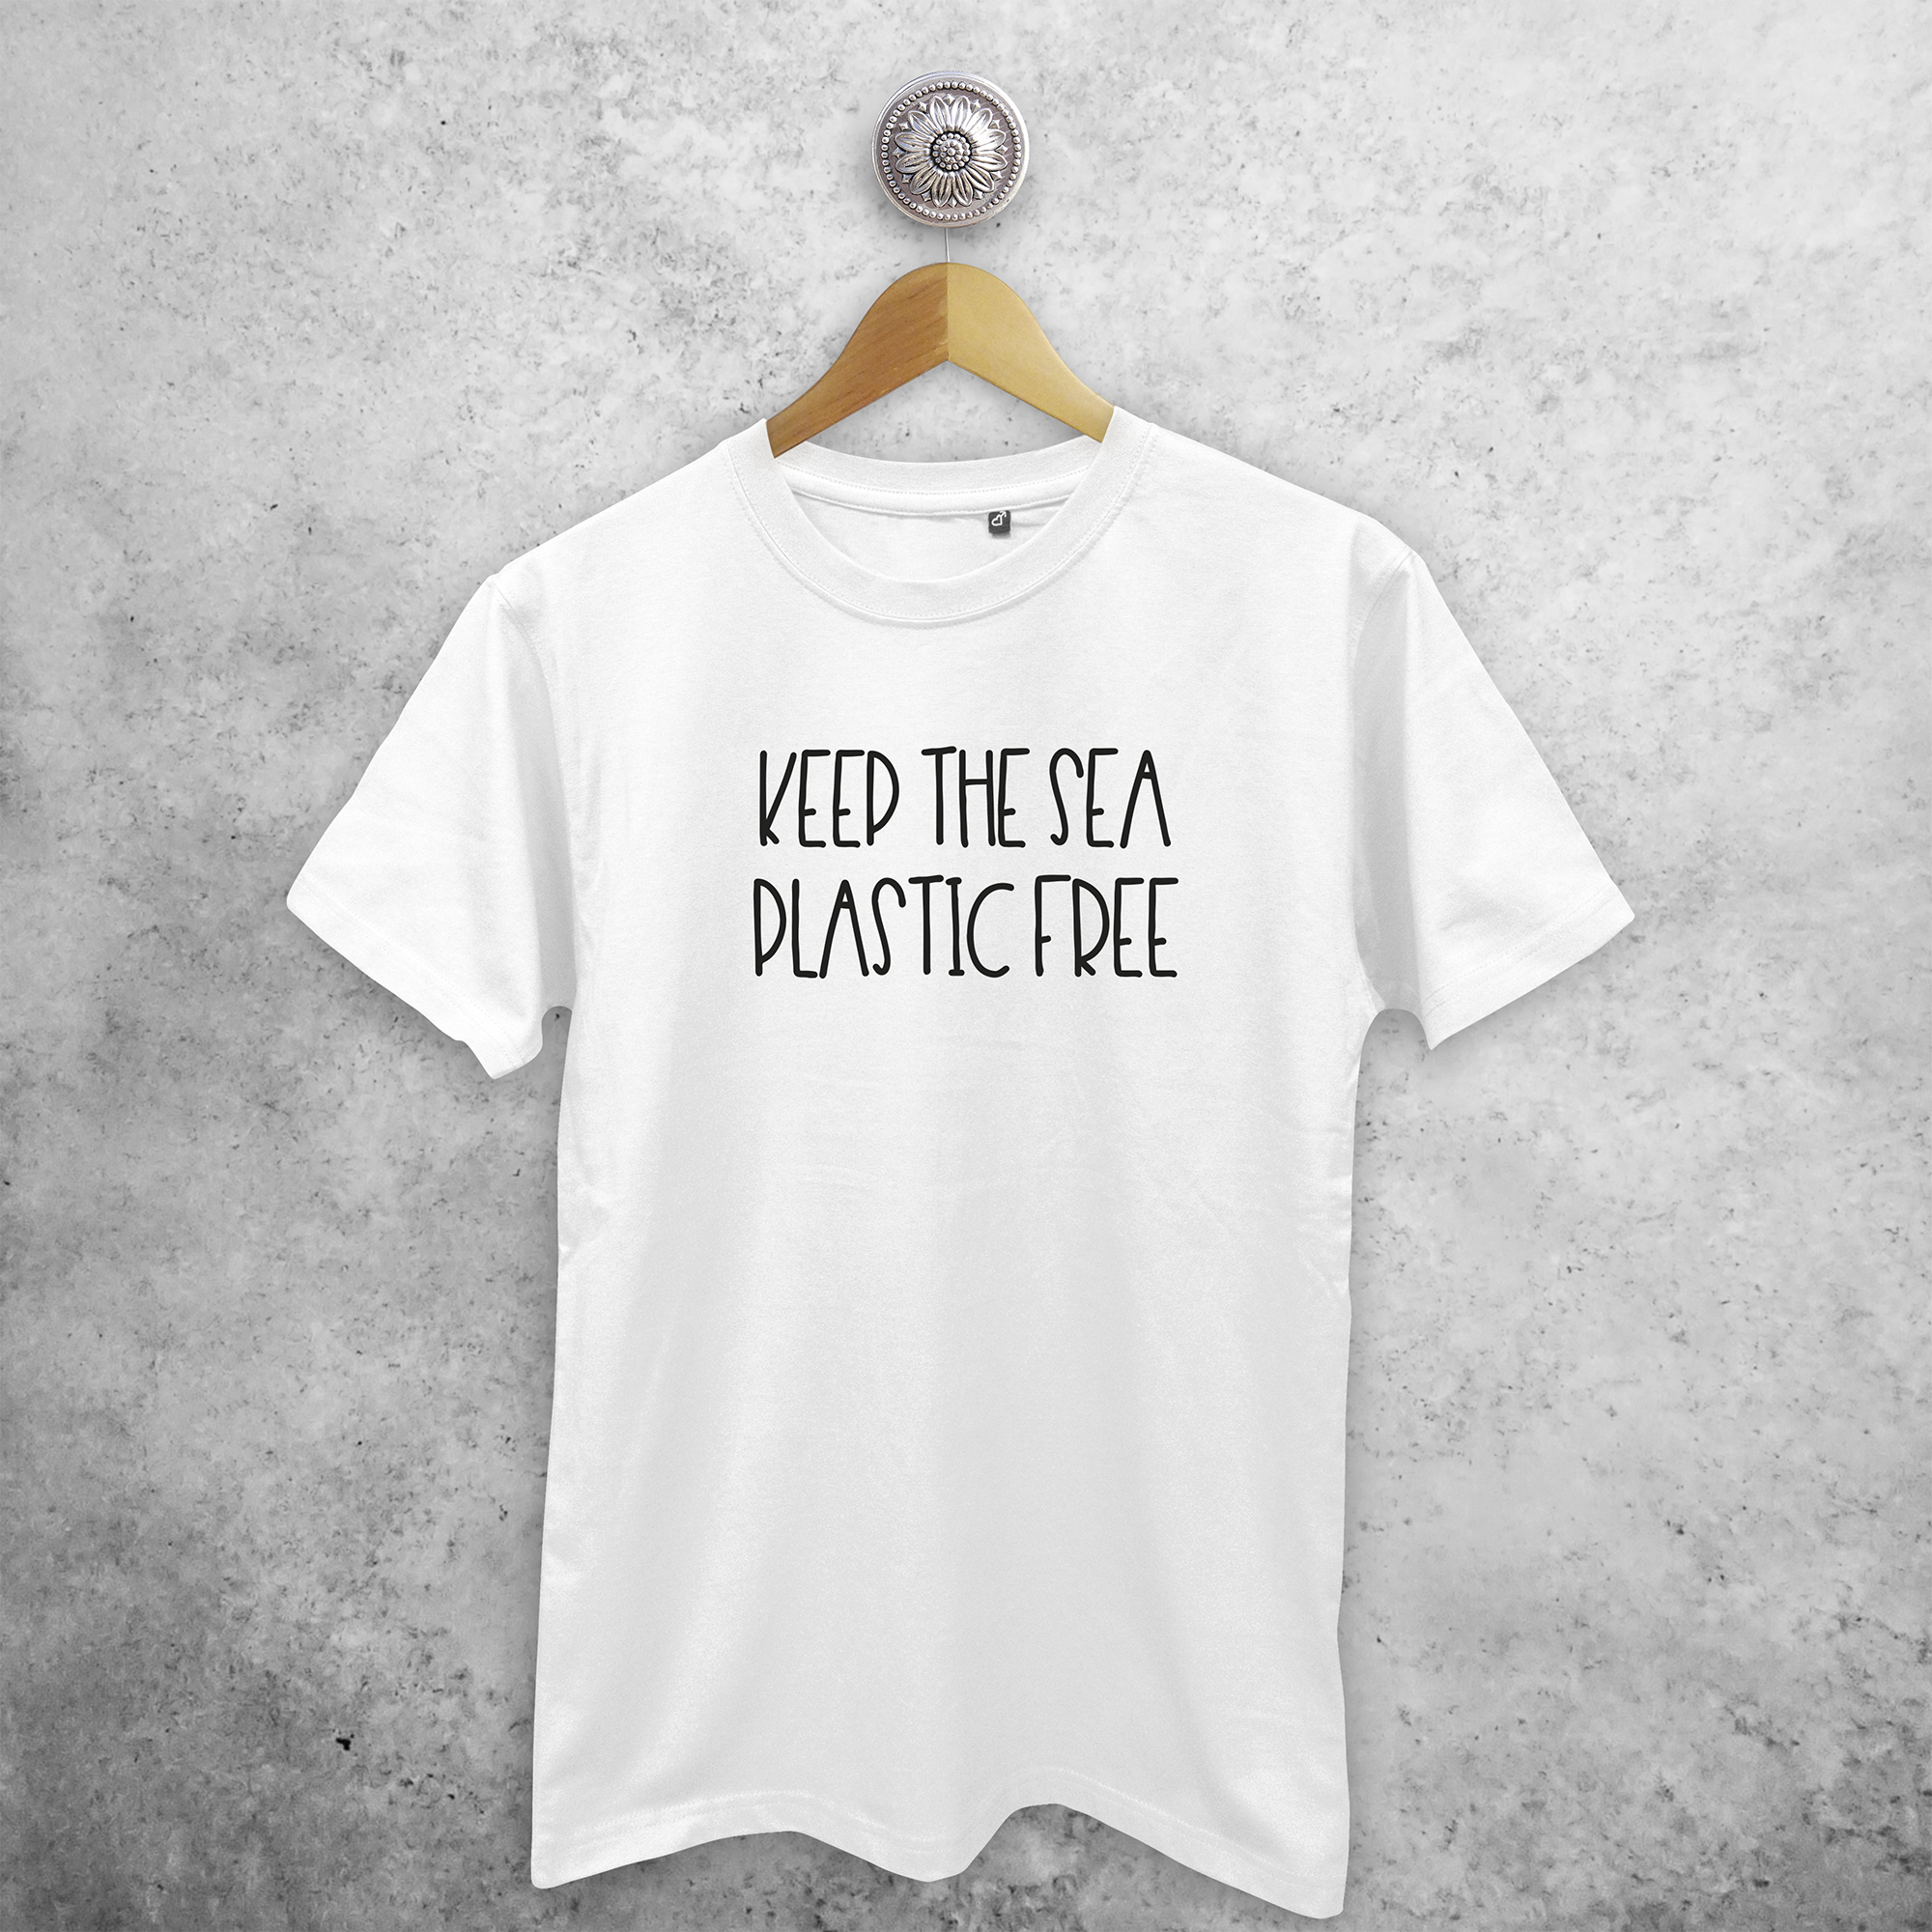 'Keep the sea plastic free' adult shirt